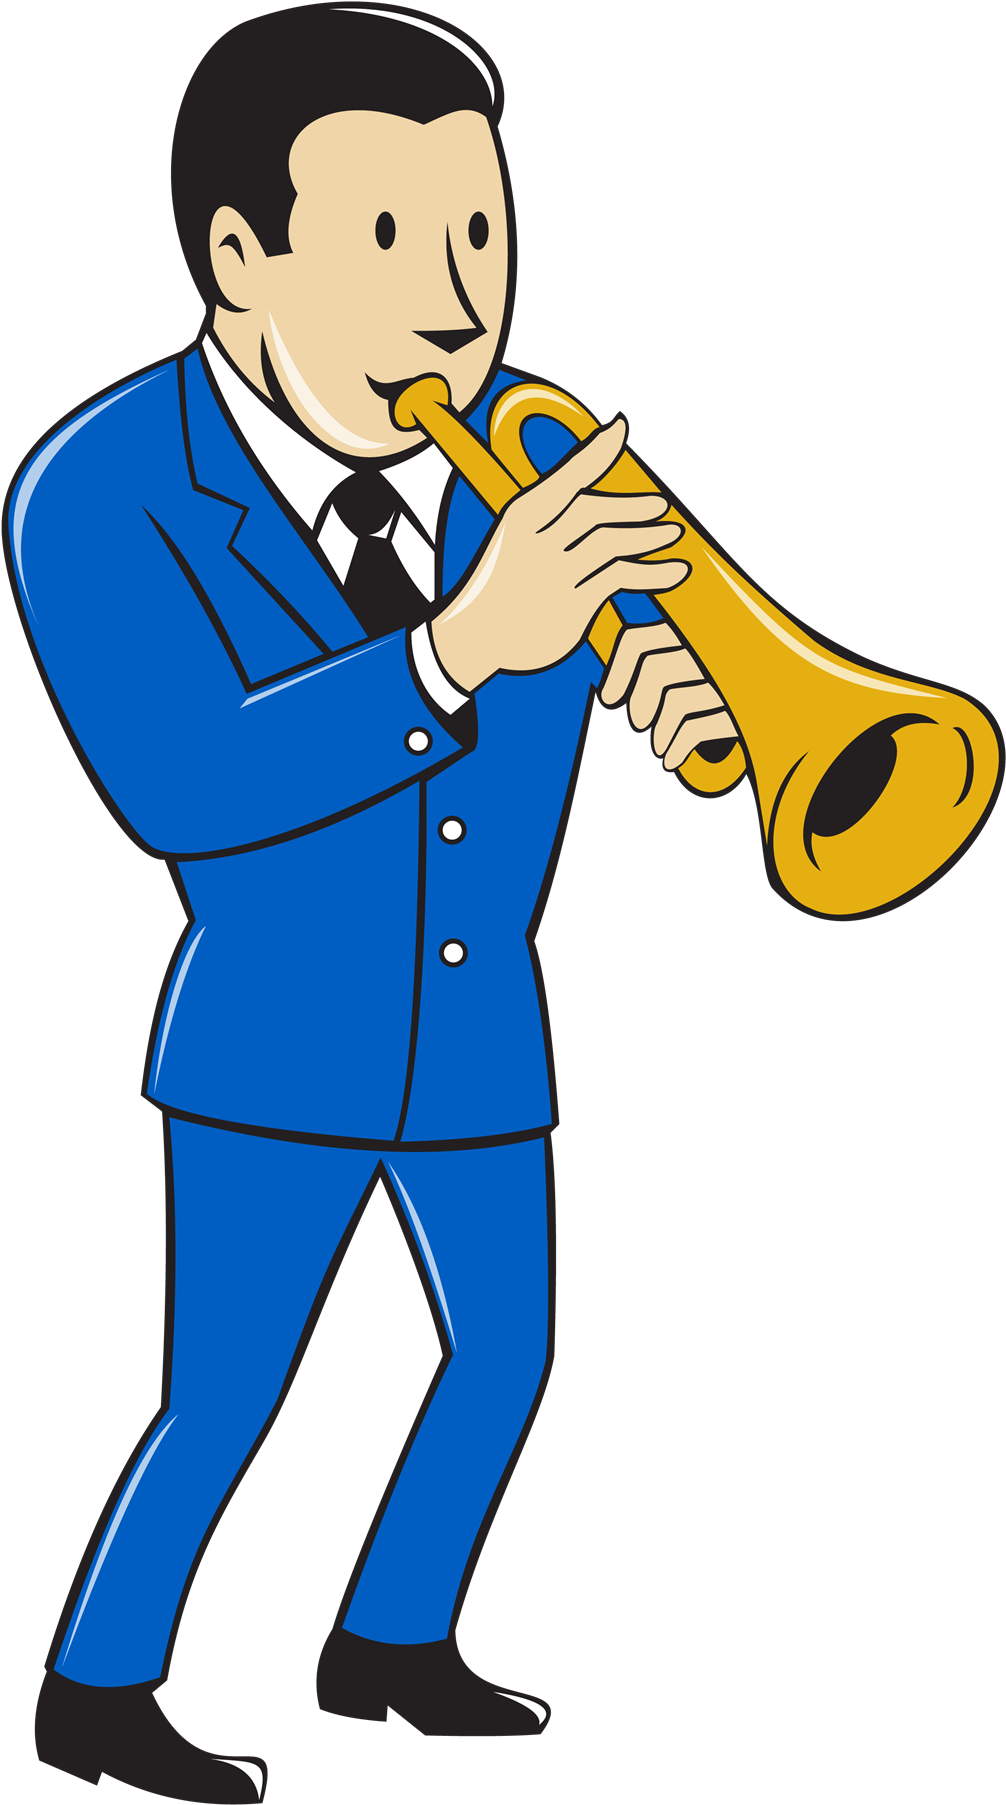 Trumpet Guy - Musician Cartoon (2200x2200)